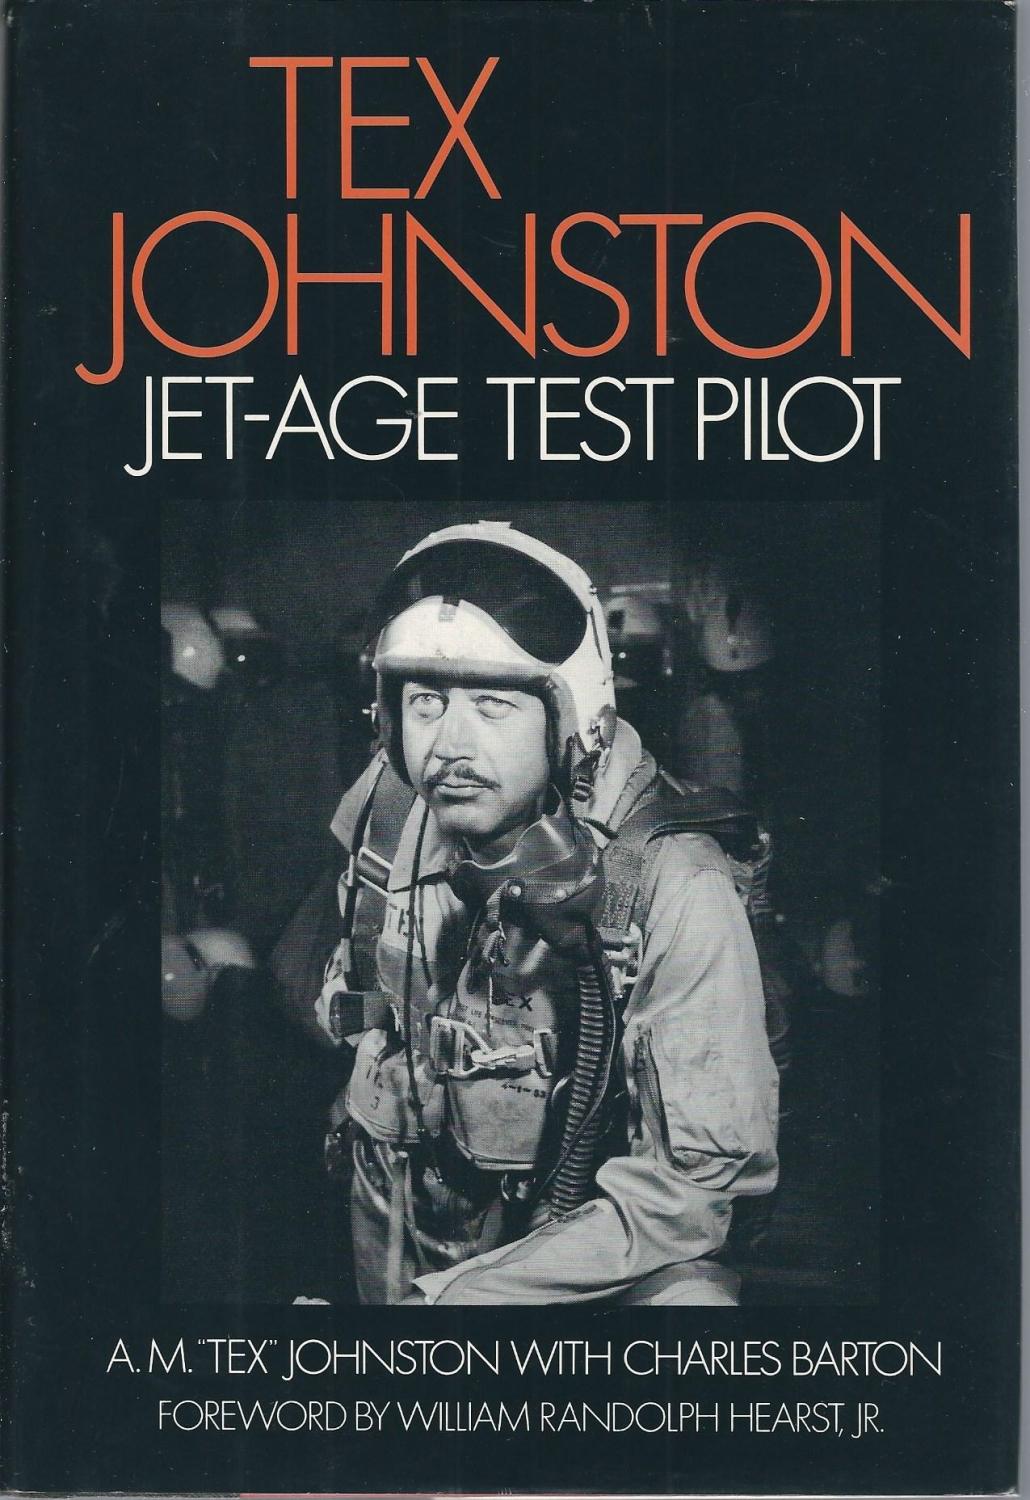 Пилот по английски. Tex Johnston. Pilot book. Пилот на английском. Test Pilot Donald 1951.